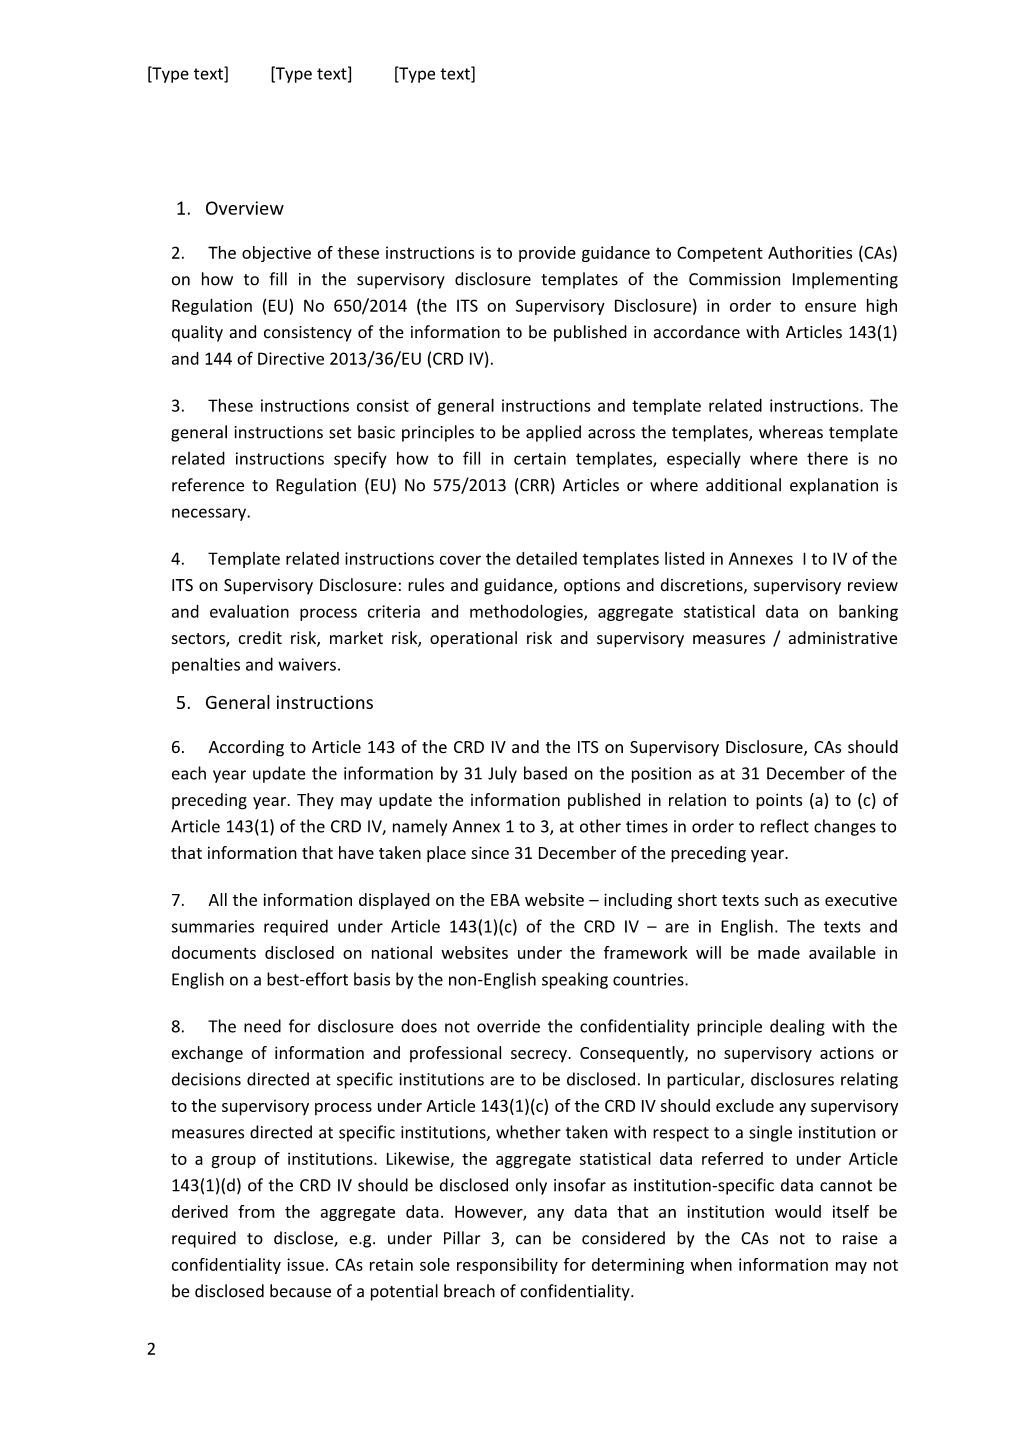 EBA BS Xx Draft Annex V (Draft CP on Amending ITS on Supervisory Disclosure) - Rev1